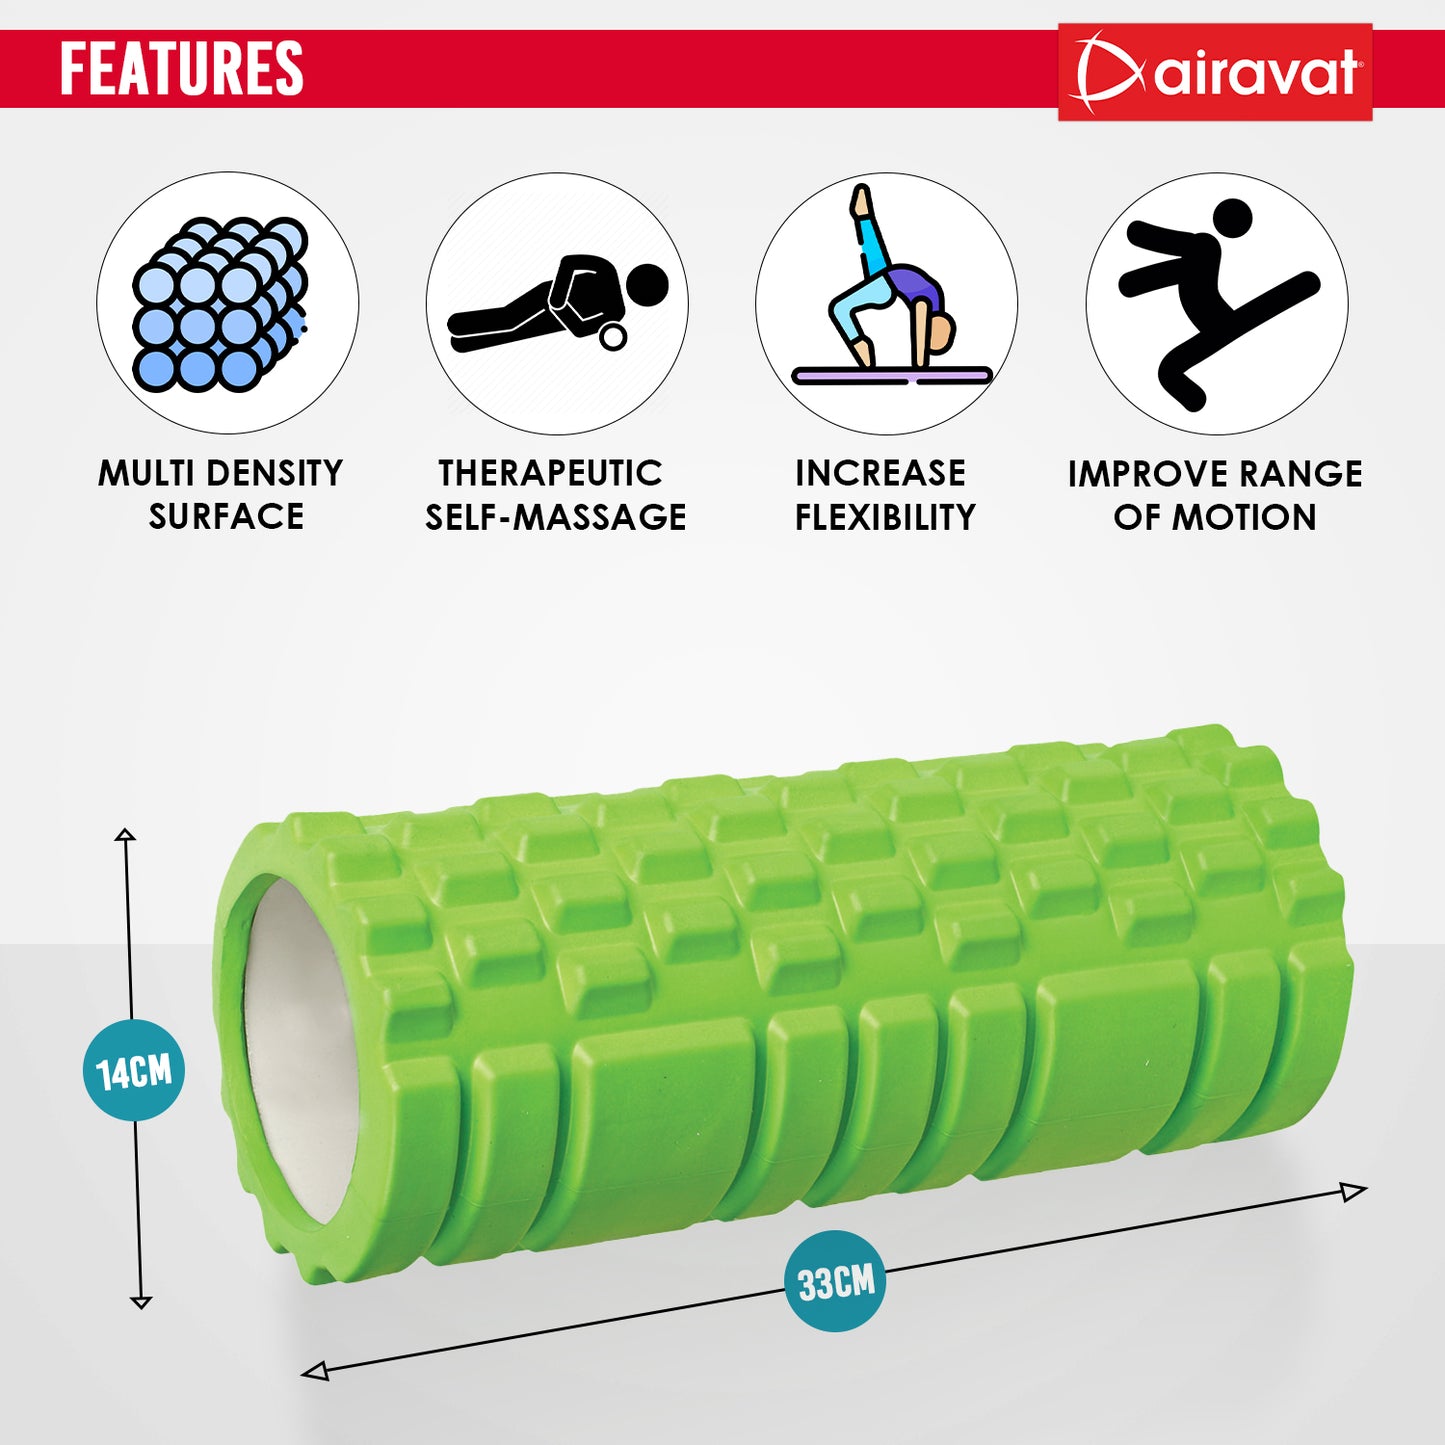 Yoga Foam roller features green